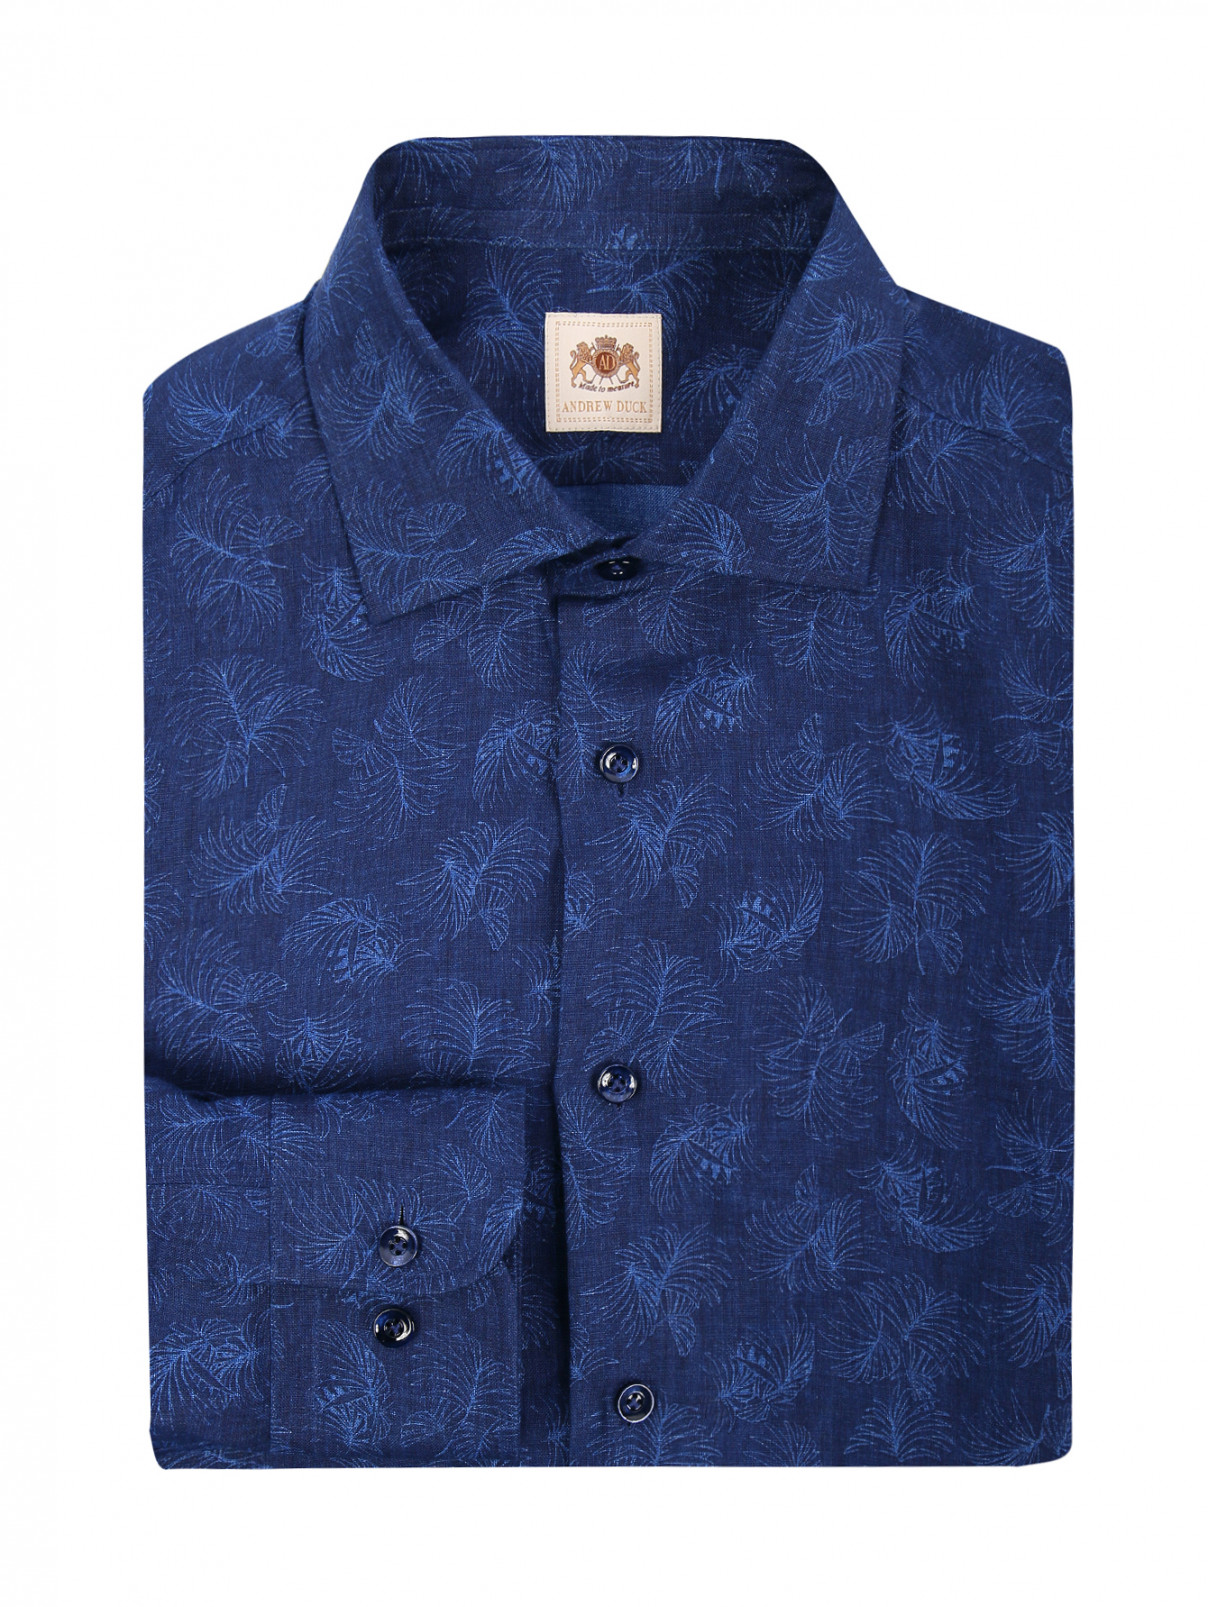 Рубашка из льна с узором Andrew Duck  –  Общий вид  – Цвет:  Синий